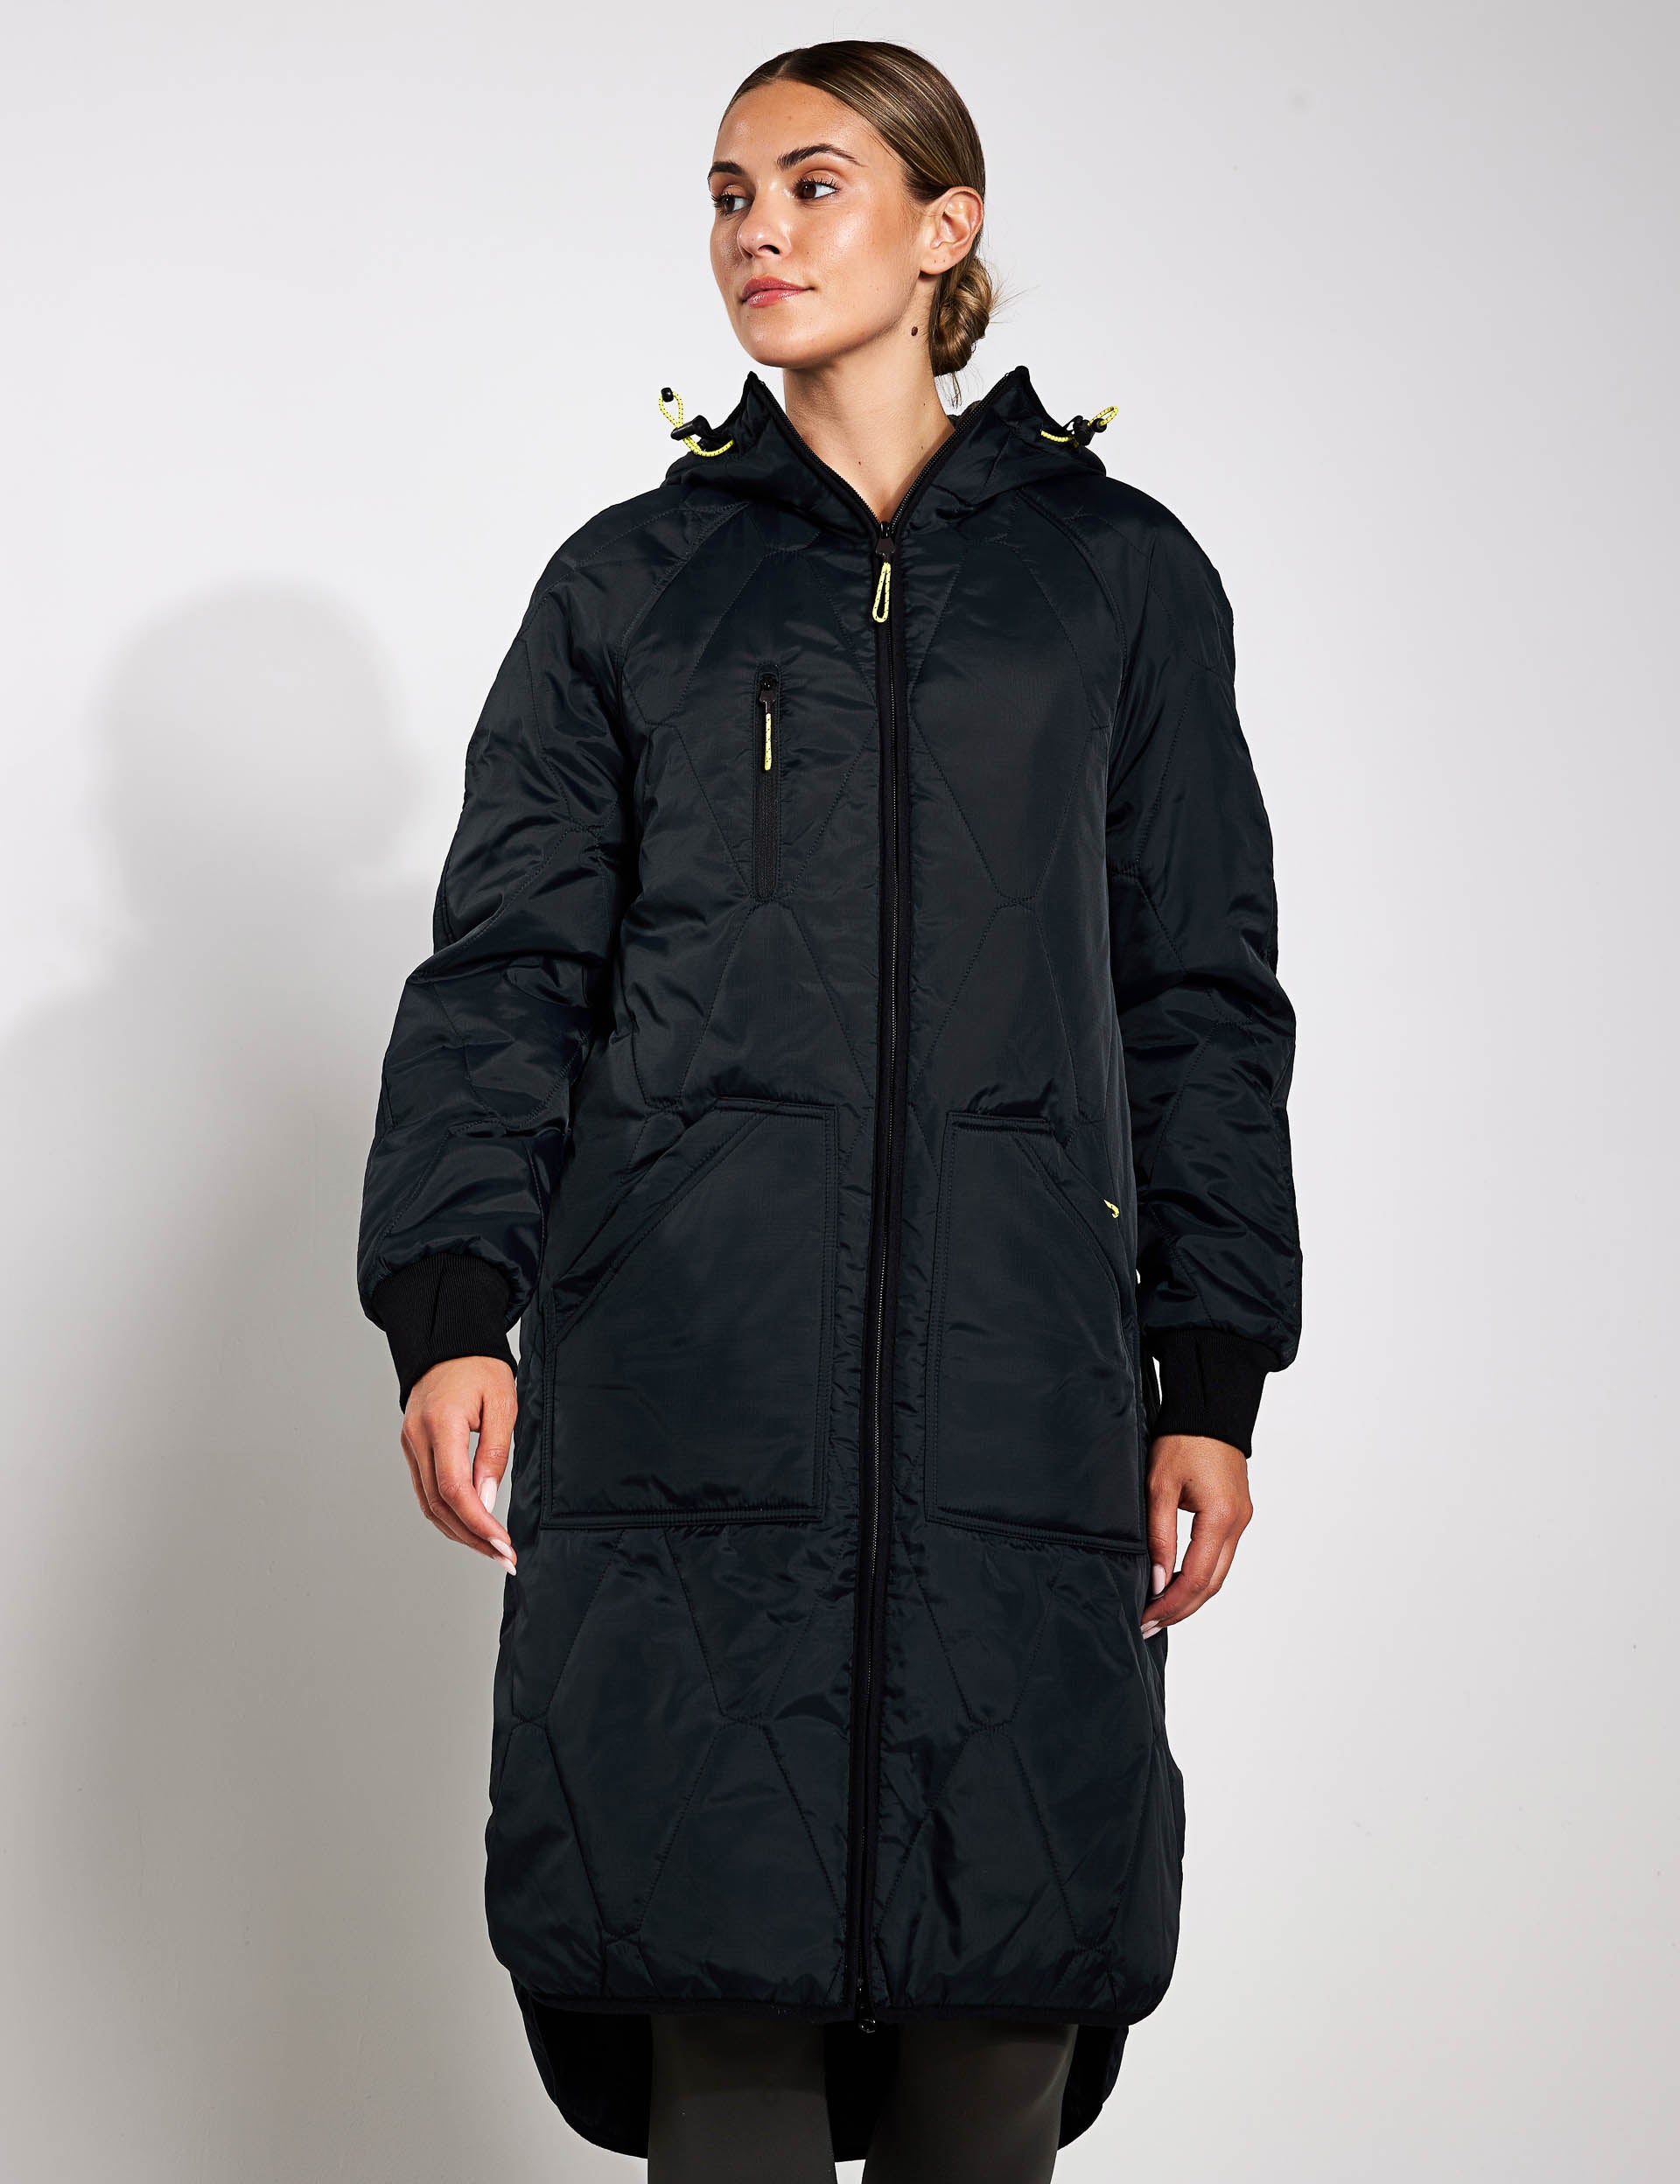 Goodmove | Stormwear Fleece Lined Parka - Black | The Sports Edit